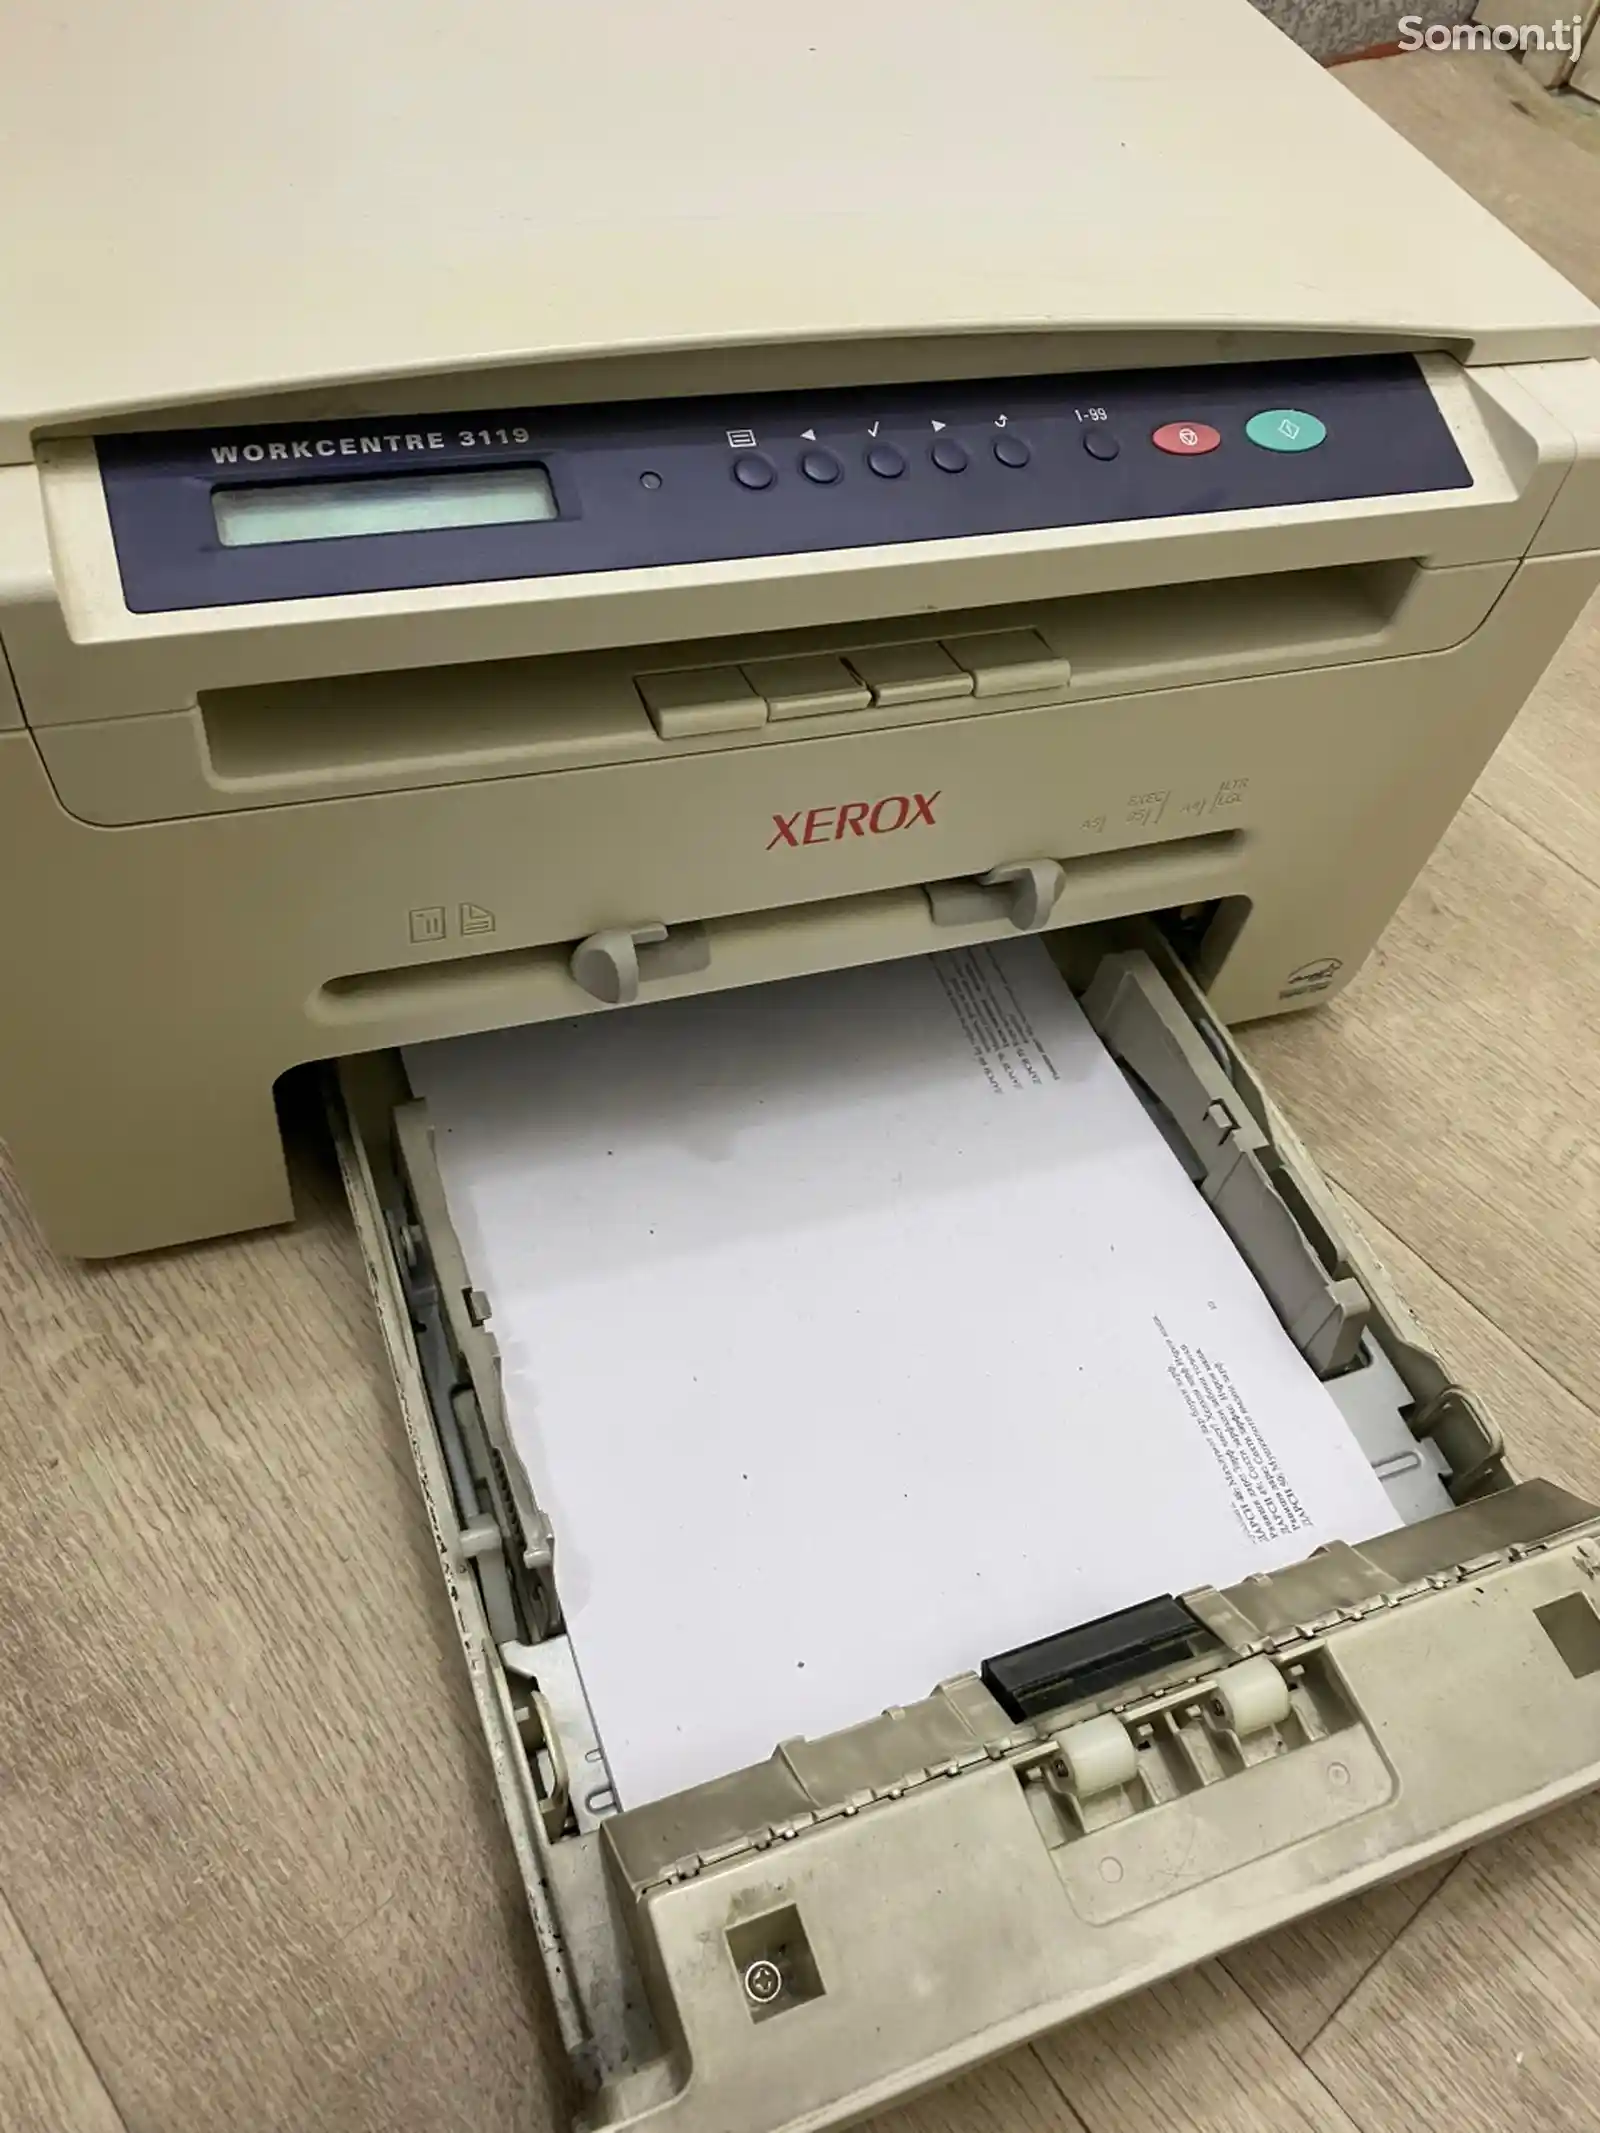 Принтер Xerox 3119-1